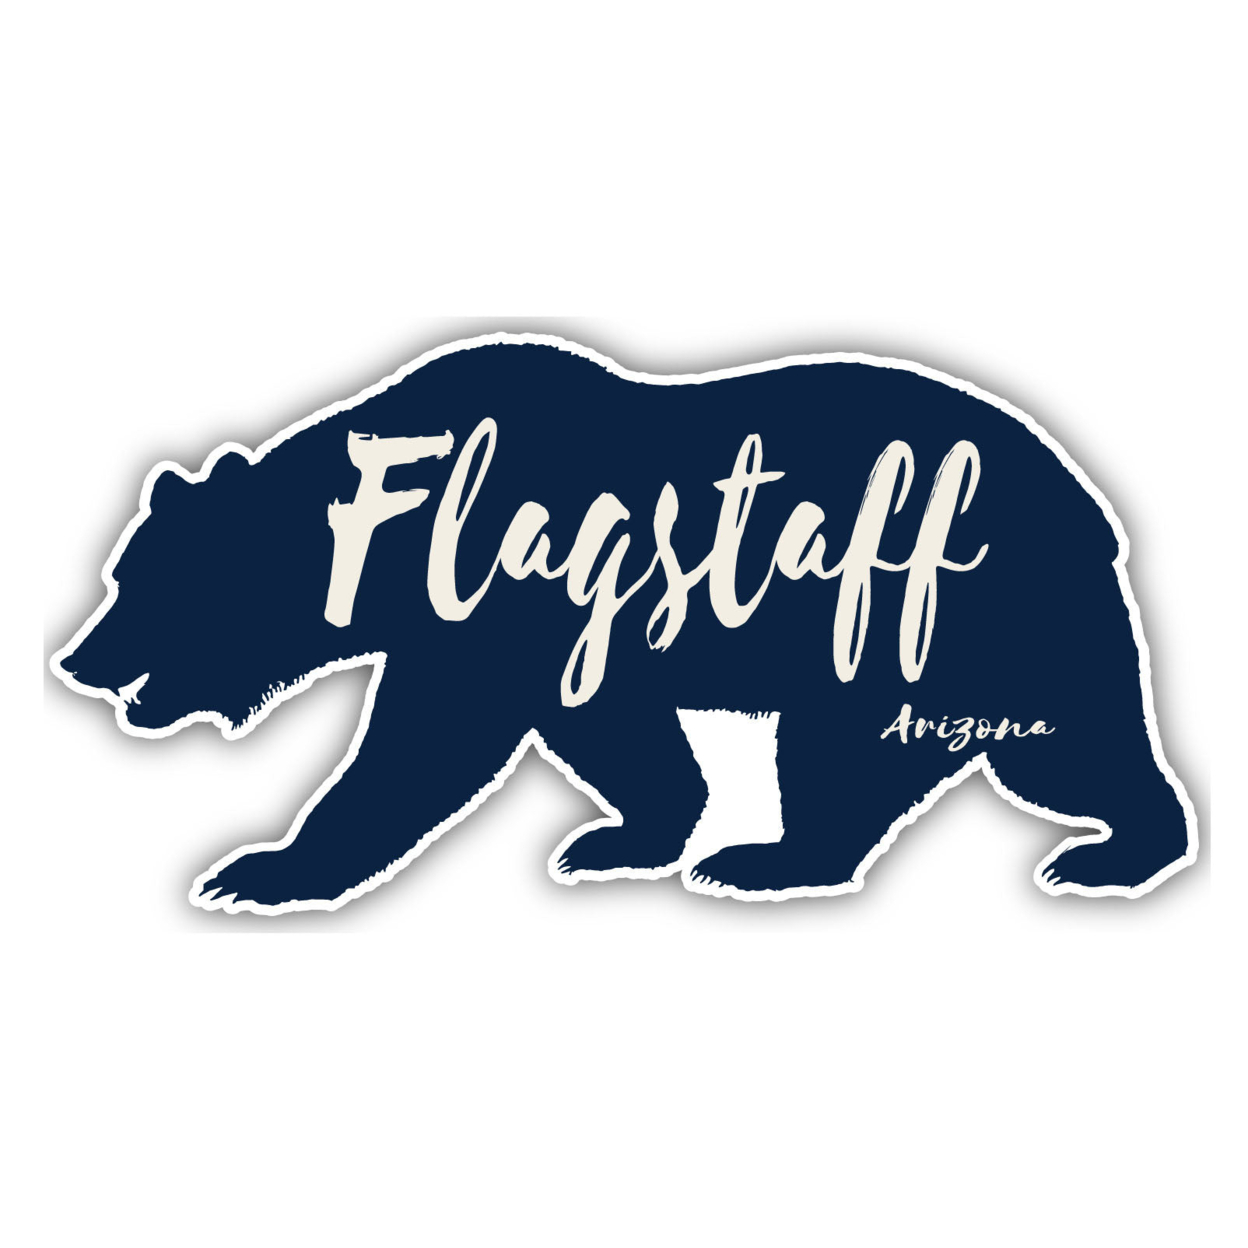 Flagstaff Arizona Souvenir Decorative Stickers (Choose Theme And Size) - 4-Pack, 8-Inch, Bear